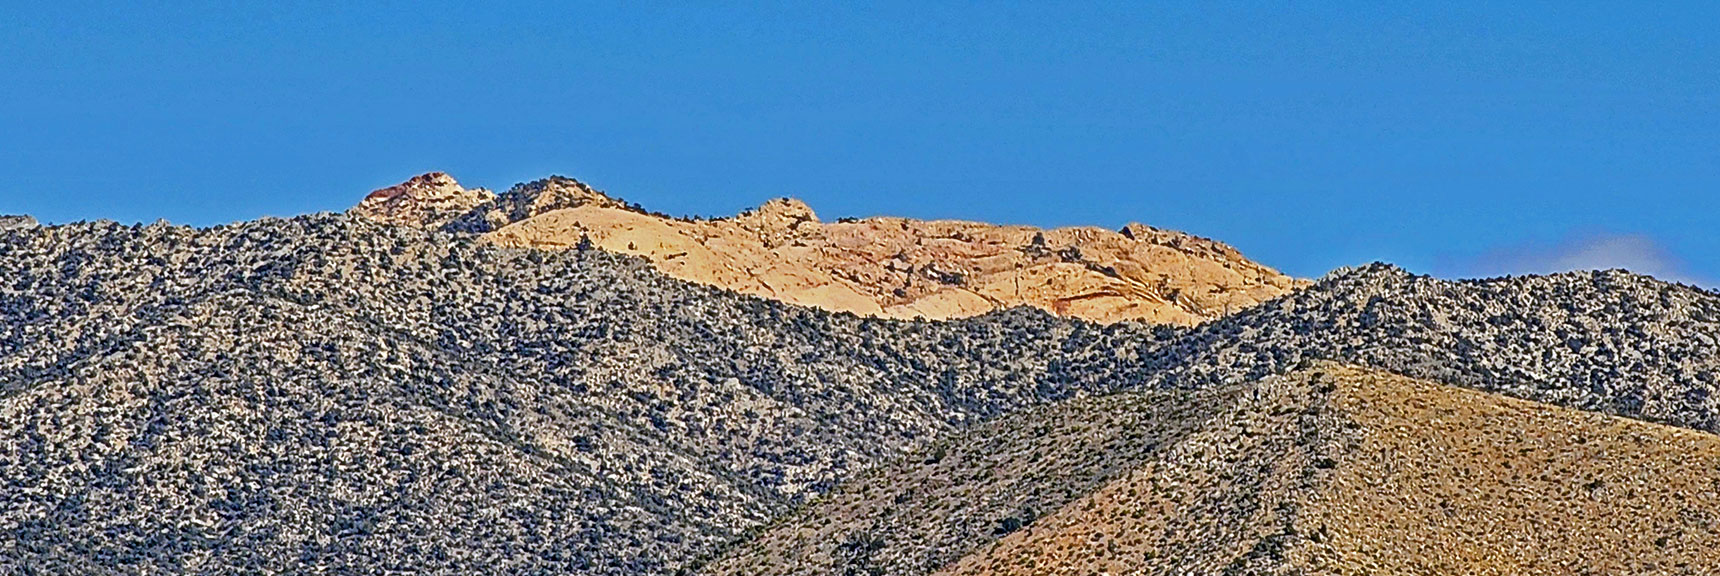 Larger View of Mt. Wilson. Easiest Summit Approach Up Salt Grass Road & Beyond. | Landmark Bluff Summit | Lovell Canyon, Nevada